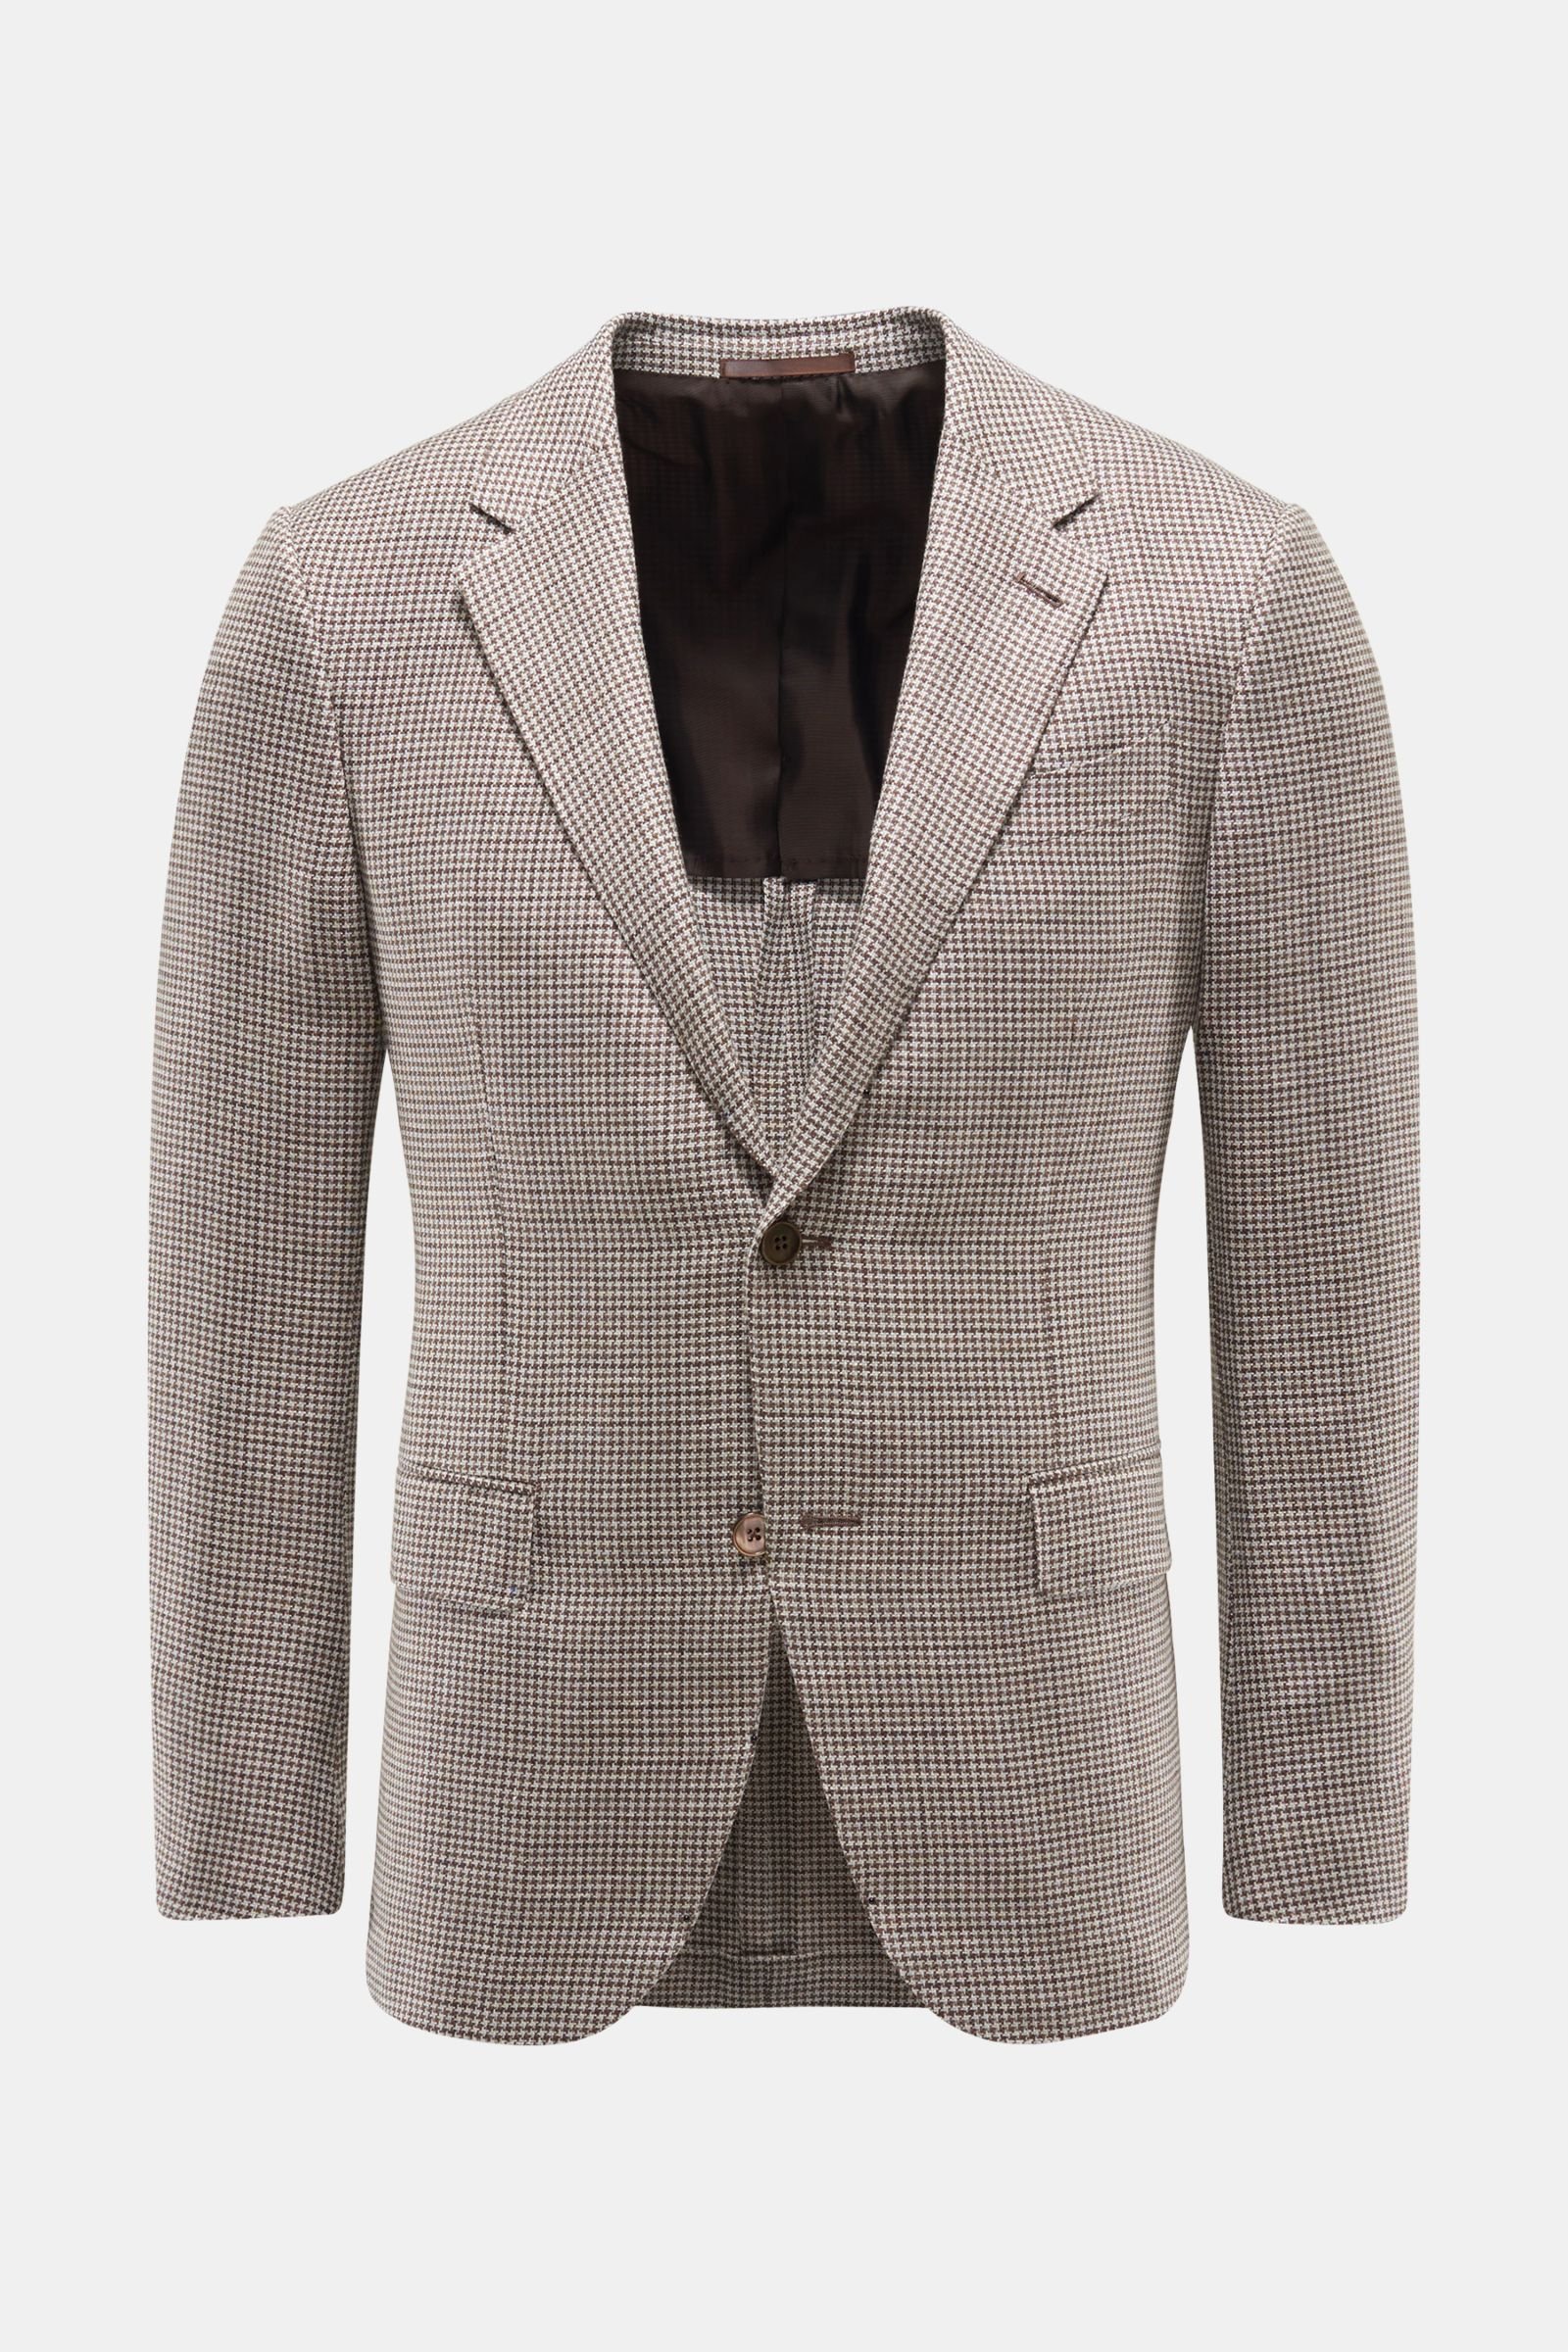 Smart-casual jacket 'Milano Easy' grey-brown checked